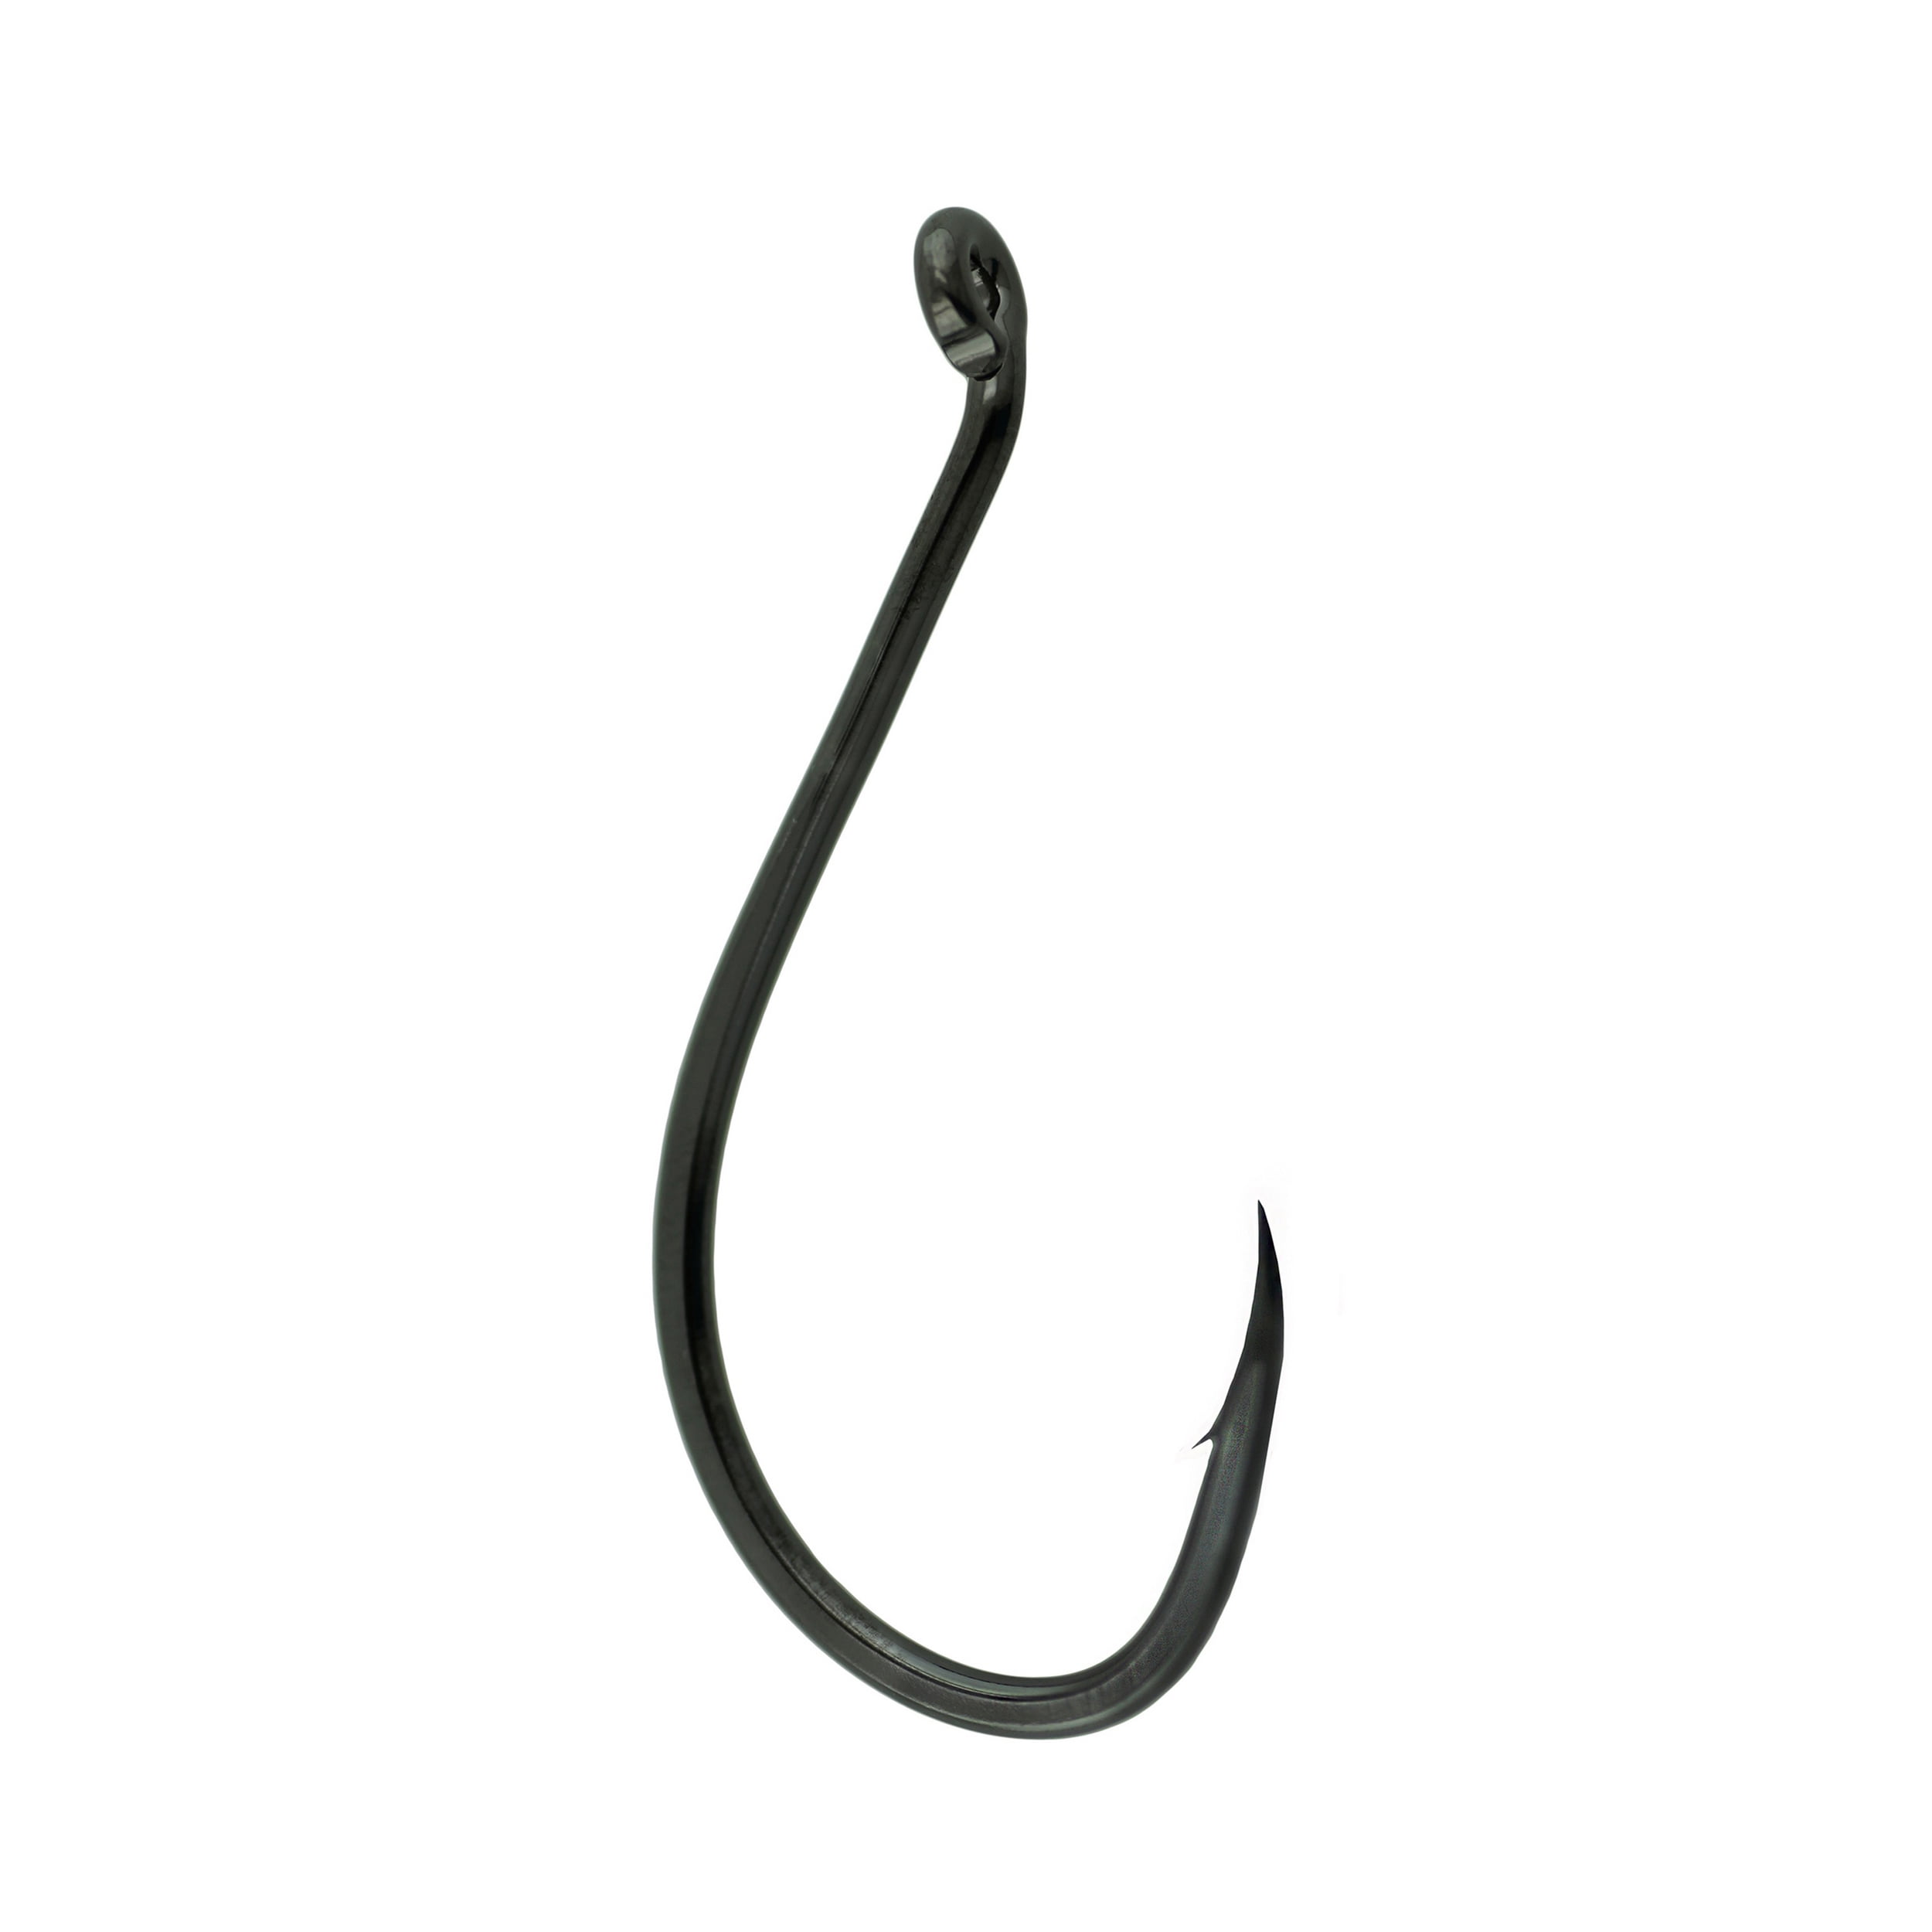  Gamakatsu 75011 Octopus Barbless Hook (6 Pack), Size 1/0,  Nickel : Fishing Hooks : Sports & Outdoors